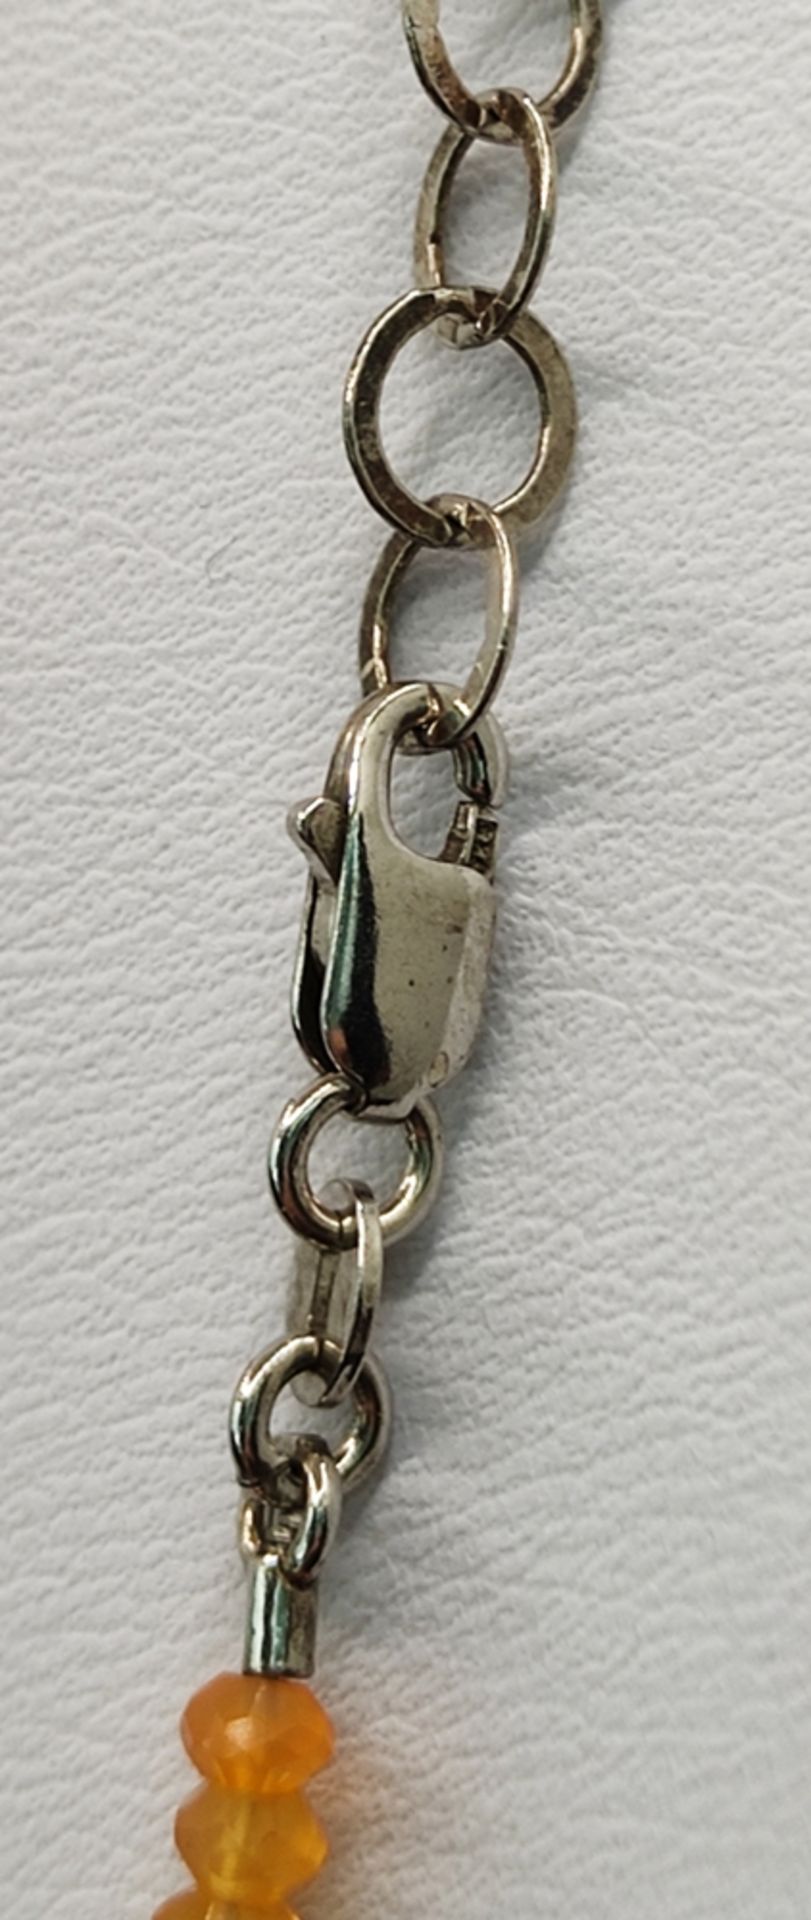 Mandarin garnet/spessartine necklace, faceted stones, lobster clasp silver 925, length 44cm - Image 4 of 4